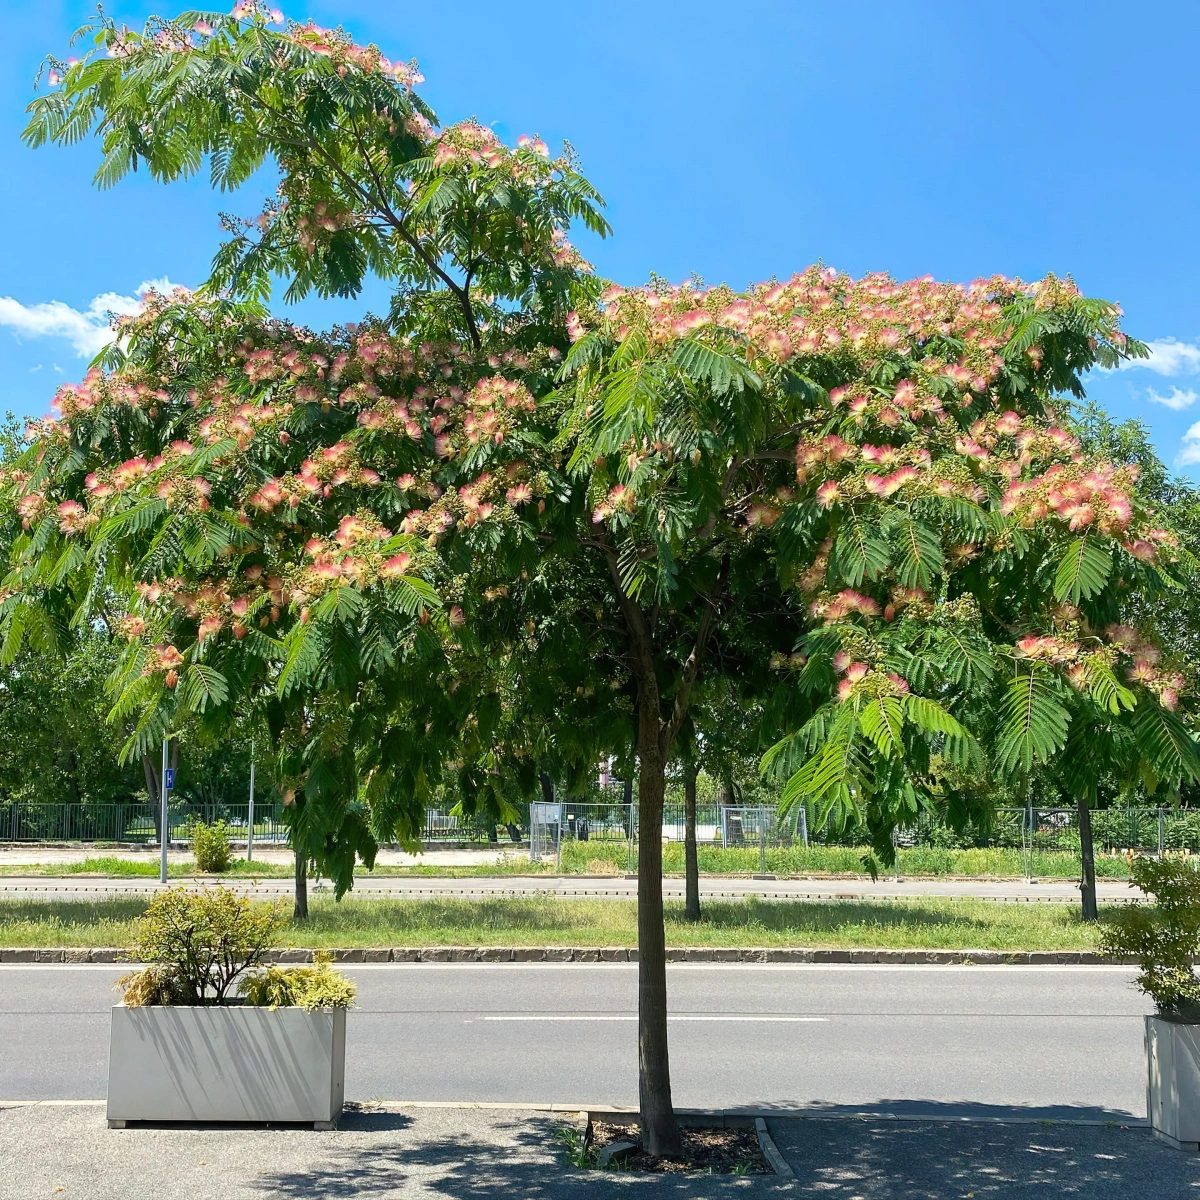 albizia arbre ombre fleurs branches feuilles vertes ciel bleu rue beton